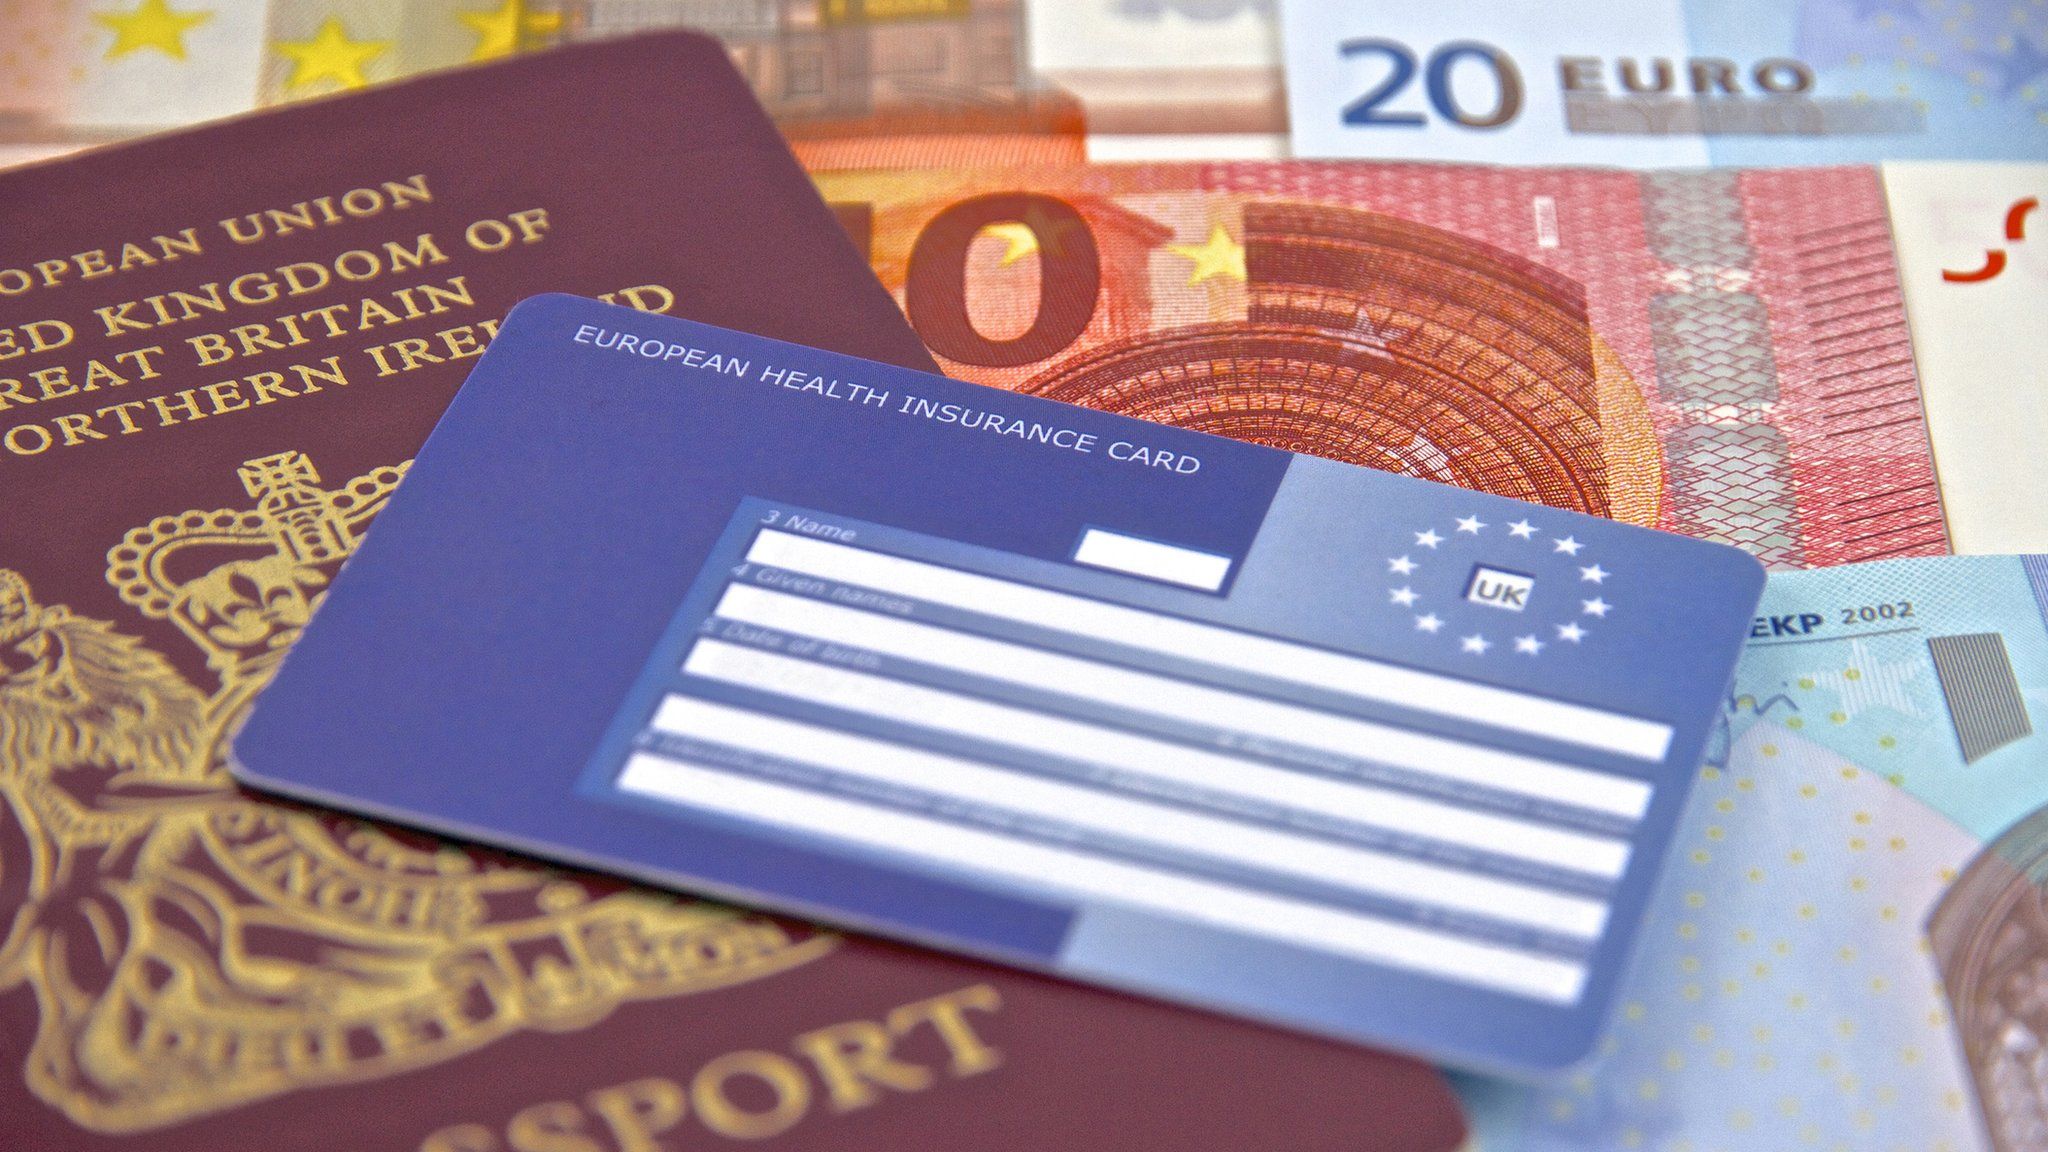 EHIC card, passport and euros